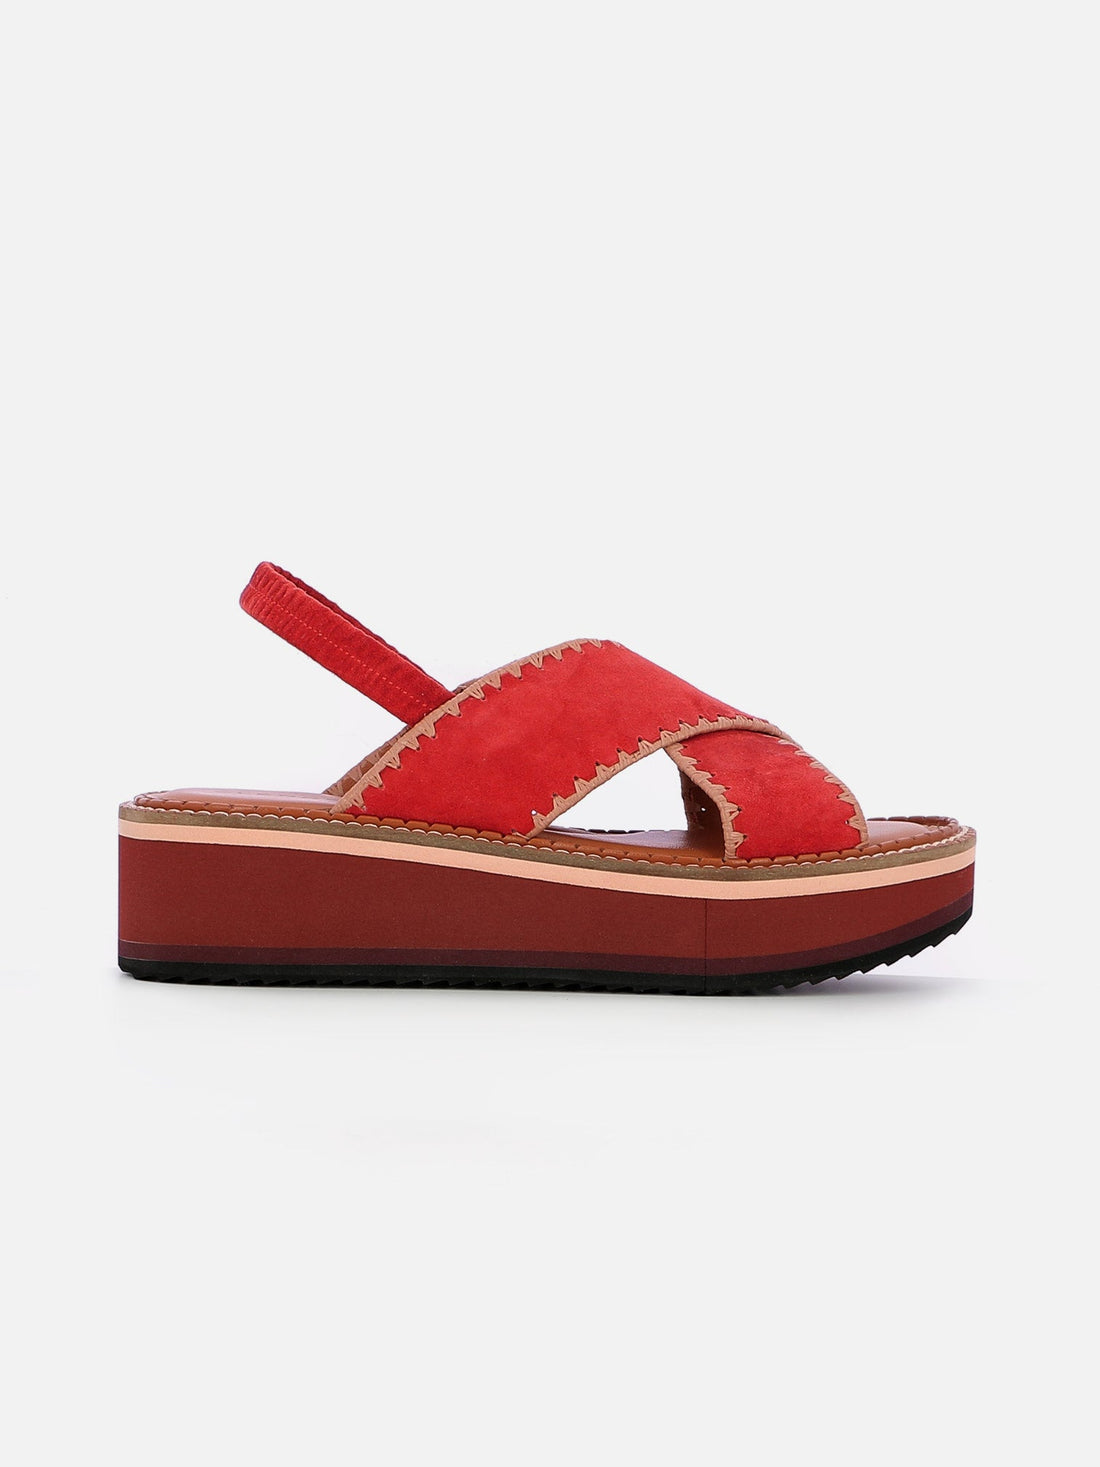 SANDALS - FREEDOM sandals, suede red - 3606063962469 - Clergerie Paris - Europe